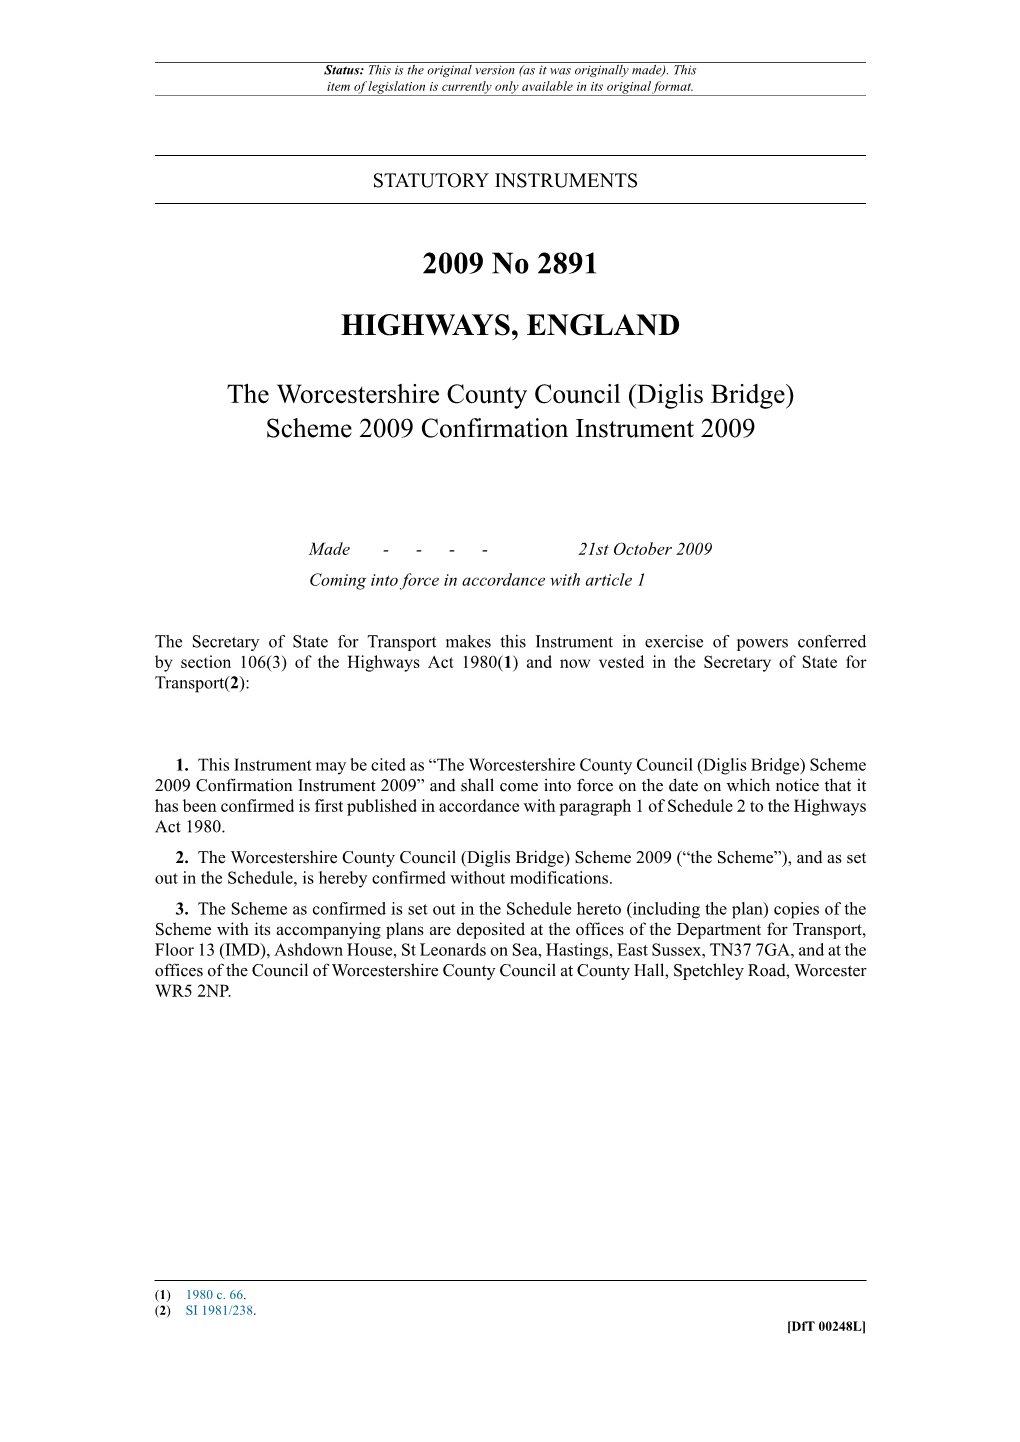 The Worcestershire County Council (Diglis Bridge) Scheme 2009 Confirmation Instrument 2009